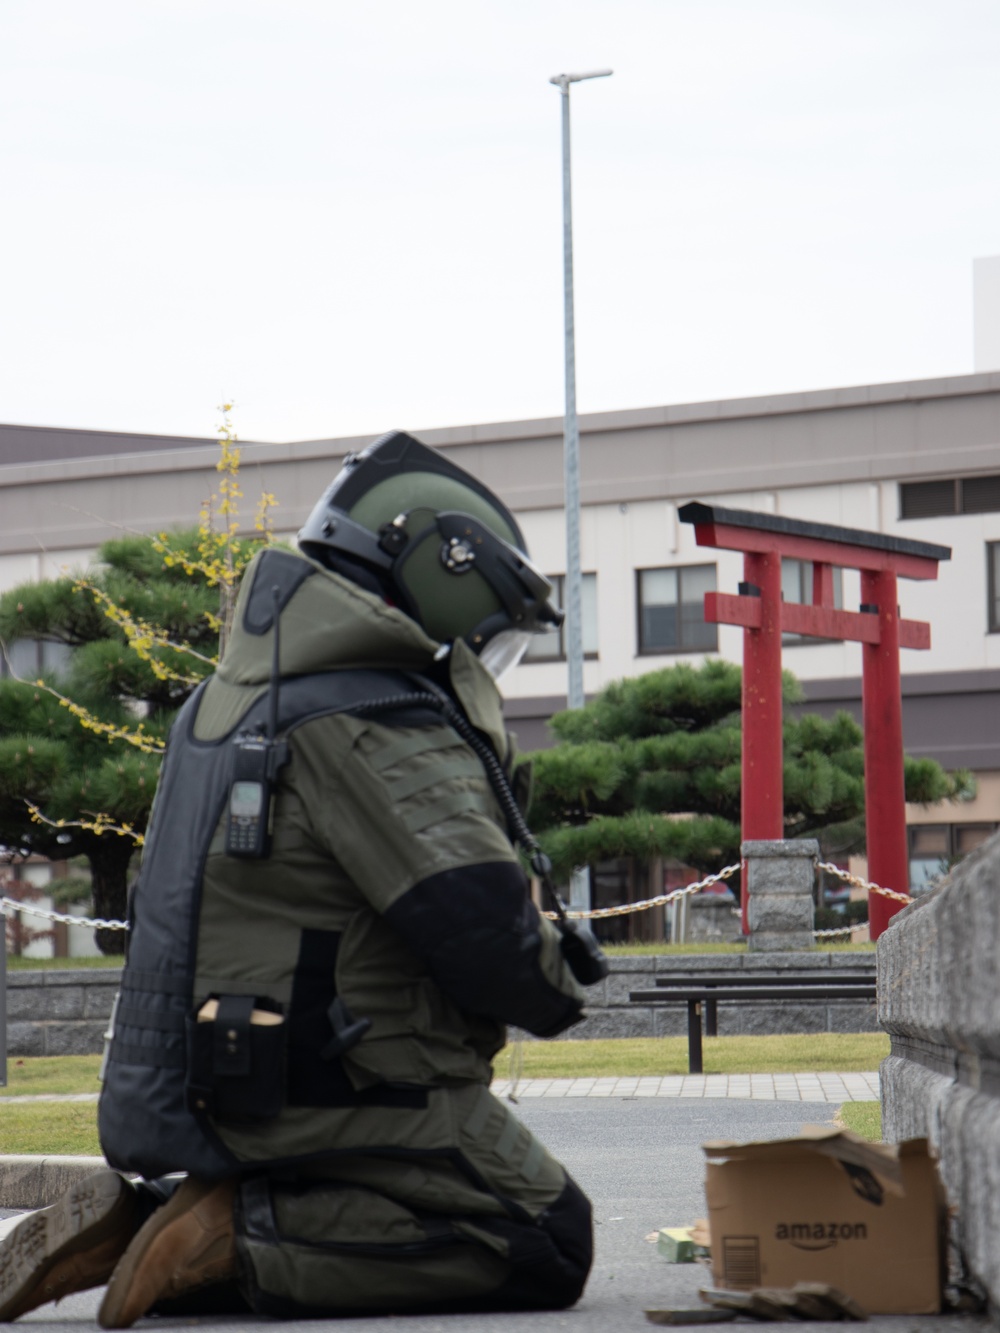 Exercise Active Shield 2021: MCAS Iwakuni Marines neutralize simulated suspicious package